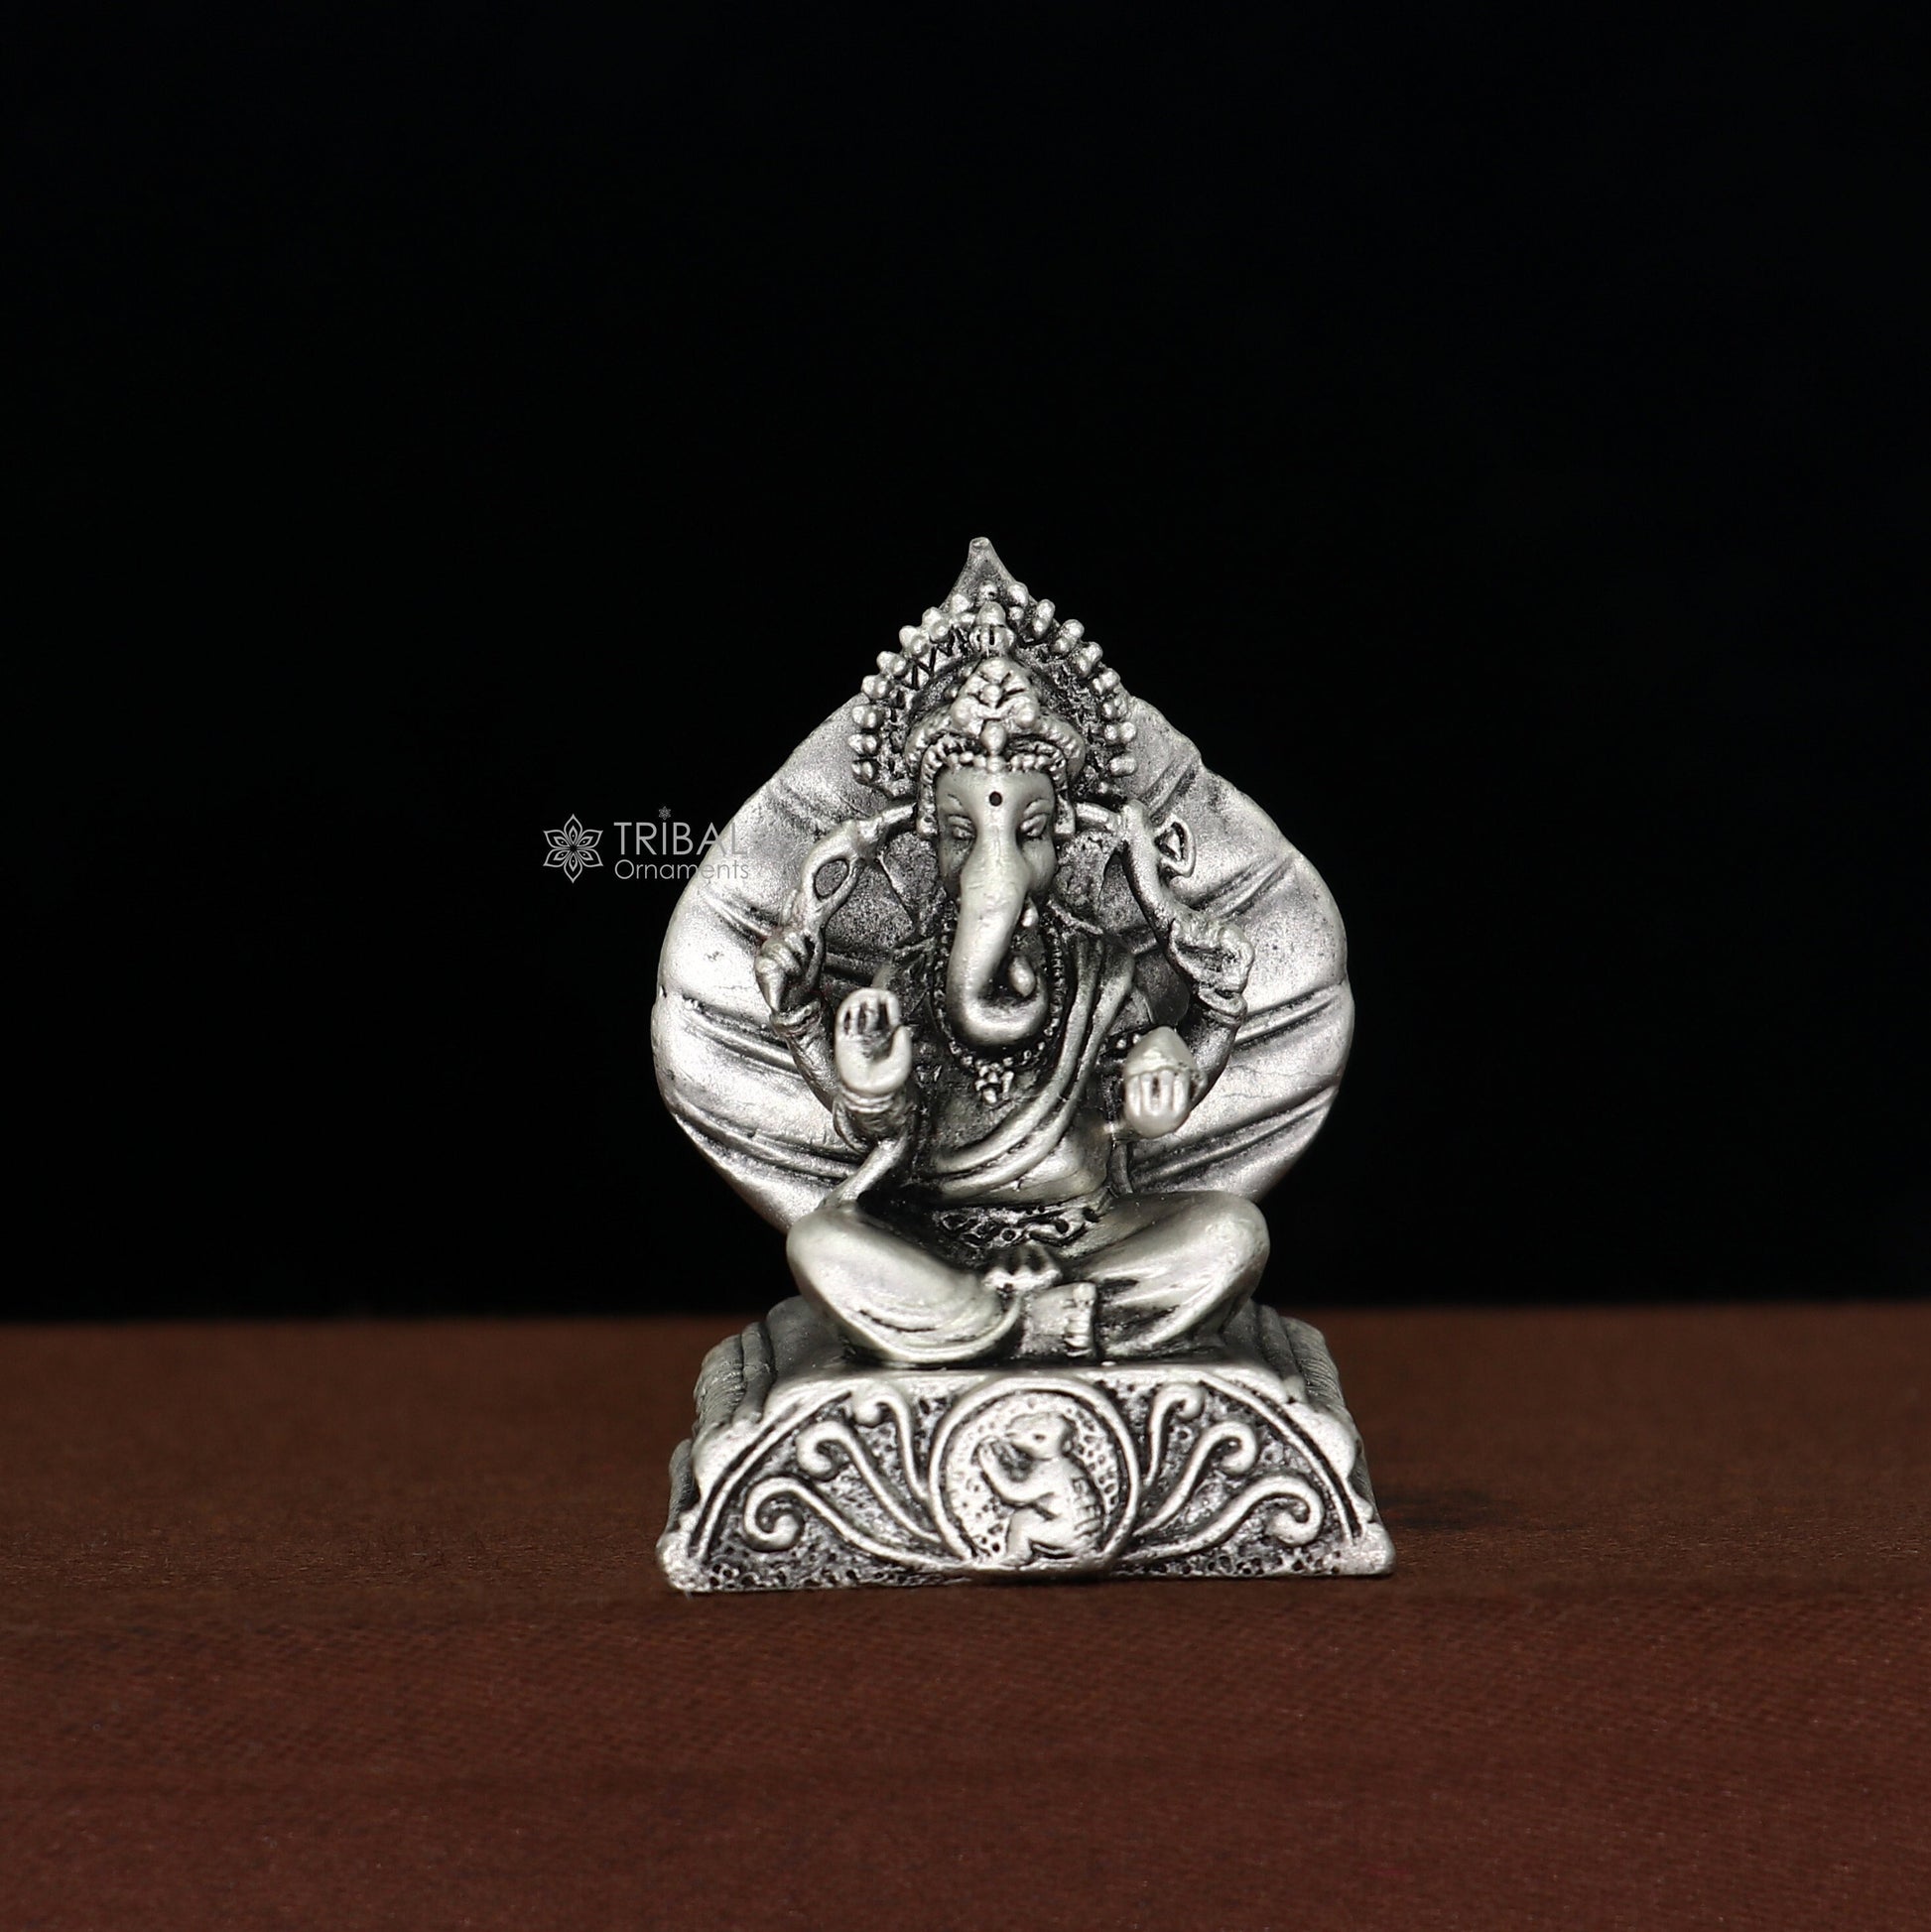 1.4"" Small solid 925 Sterling silver Lord pan ganesha, Pooja Articles, Silver Idols Ganesha statue sculpture Diwali puja figurine art677 - TRIBAL ORNAMENTS